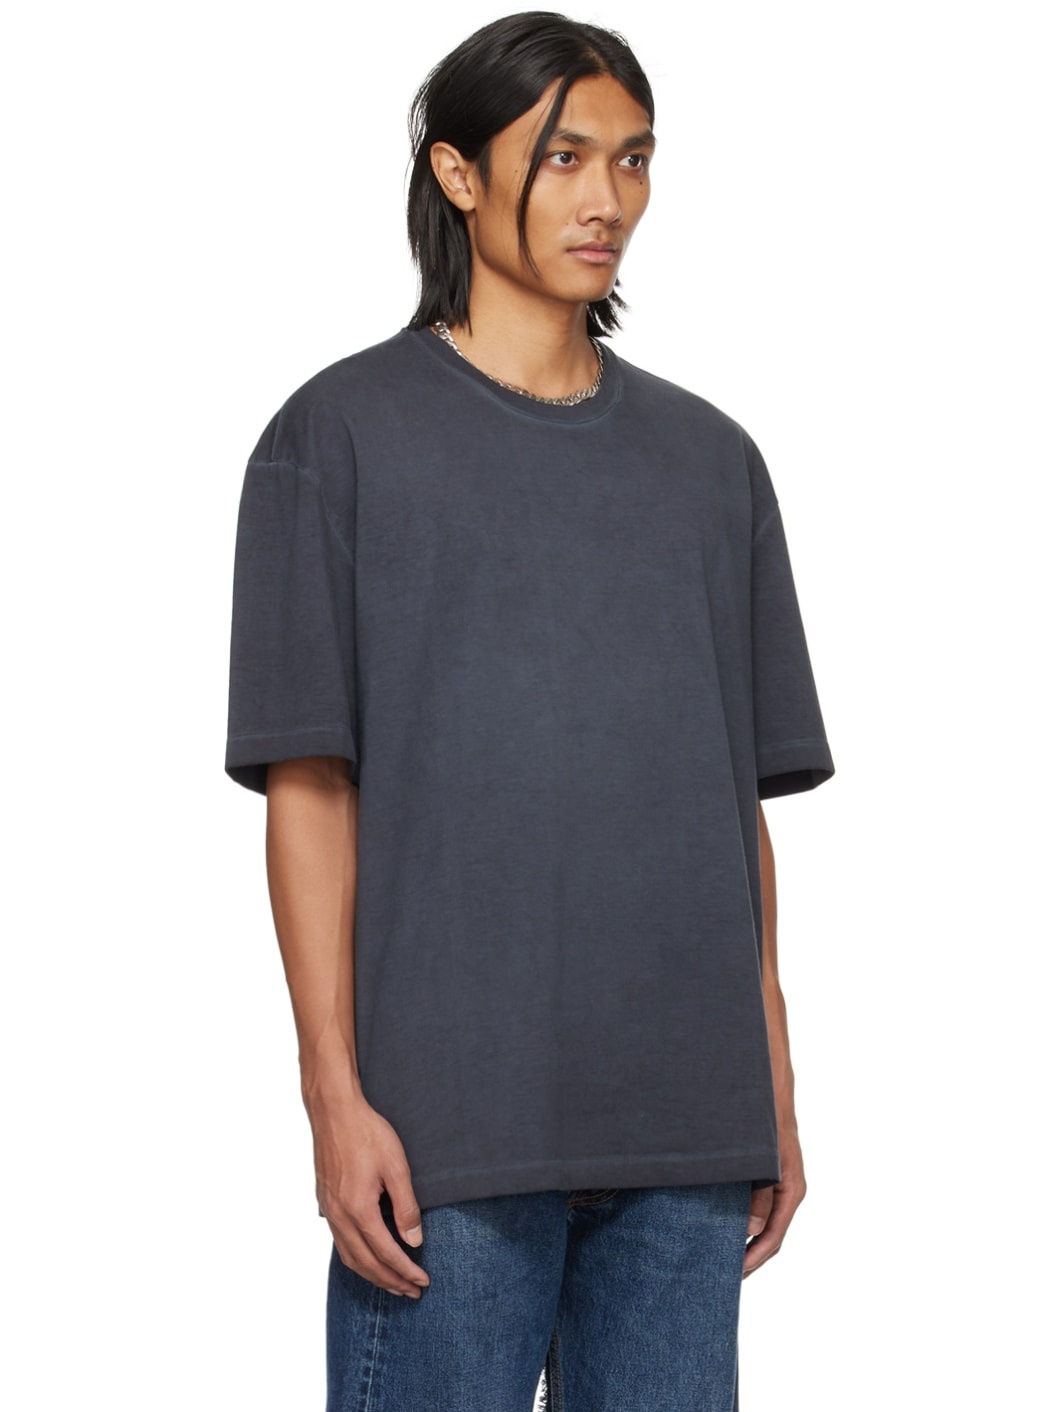 Gray Weathered T-Shirt - 5